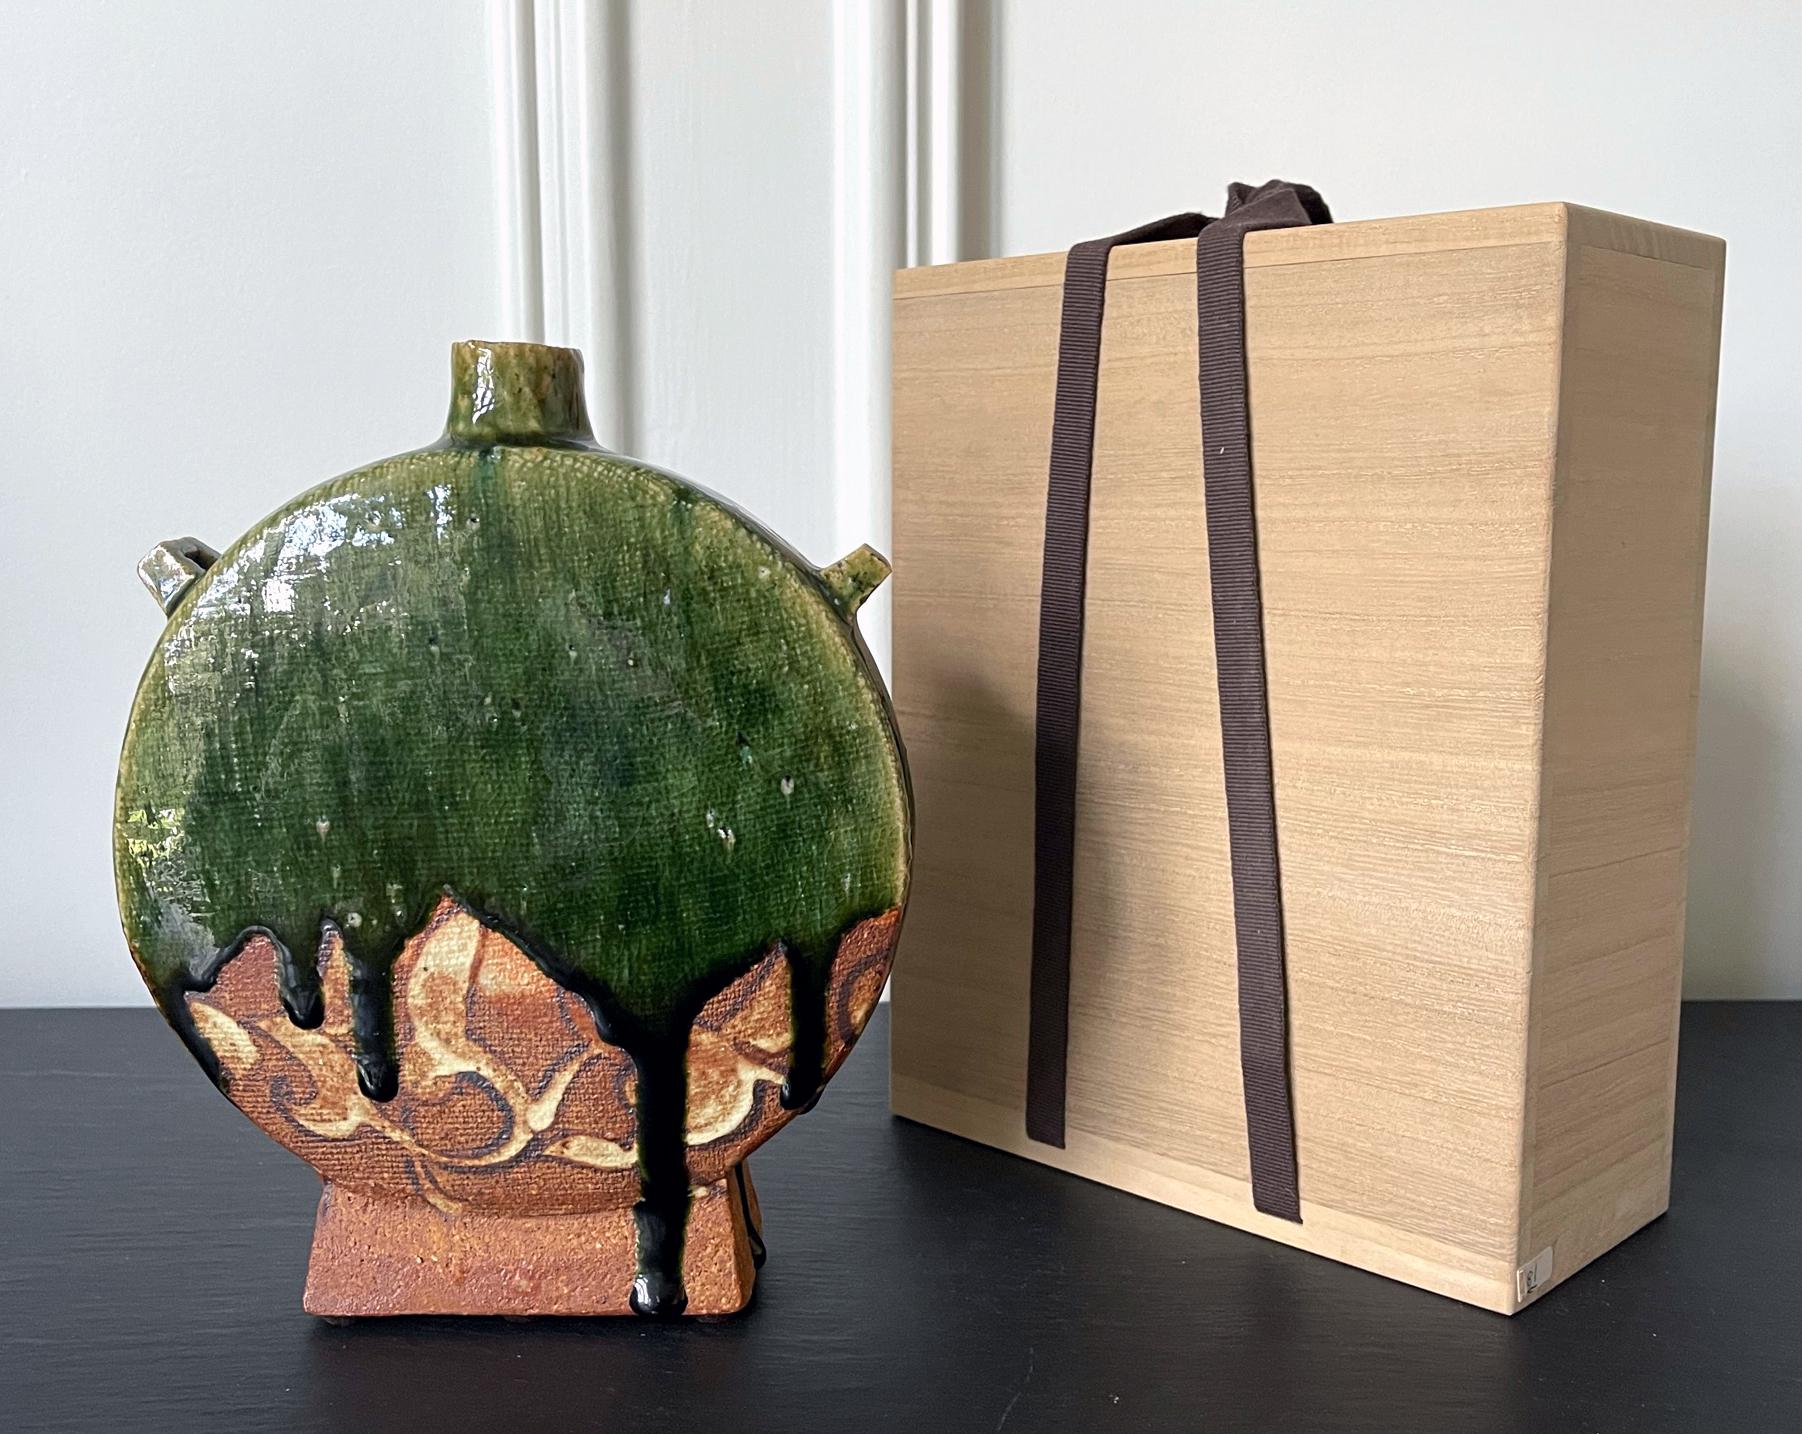 A contemporary studio ceramic vase made by Japanese potter Ken Matsuzaki (1950-). The vase showcases distinguished 